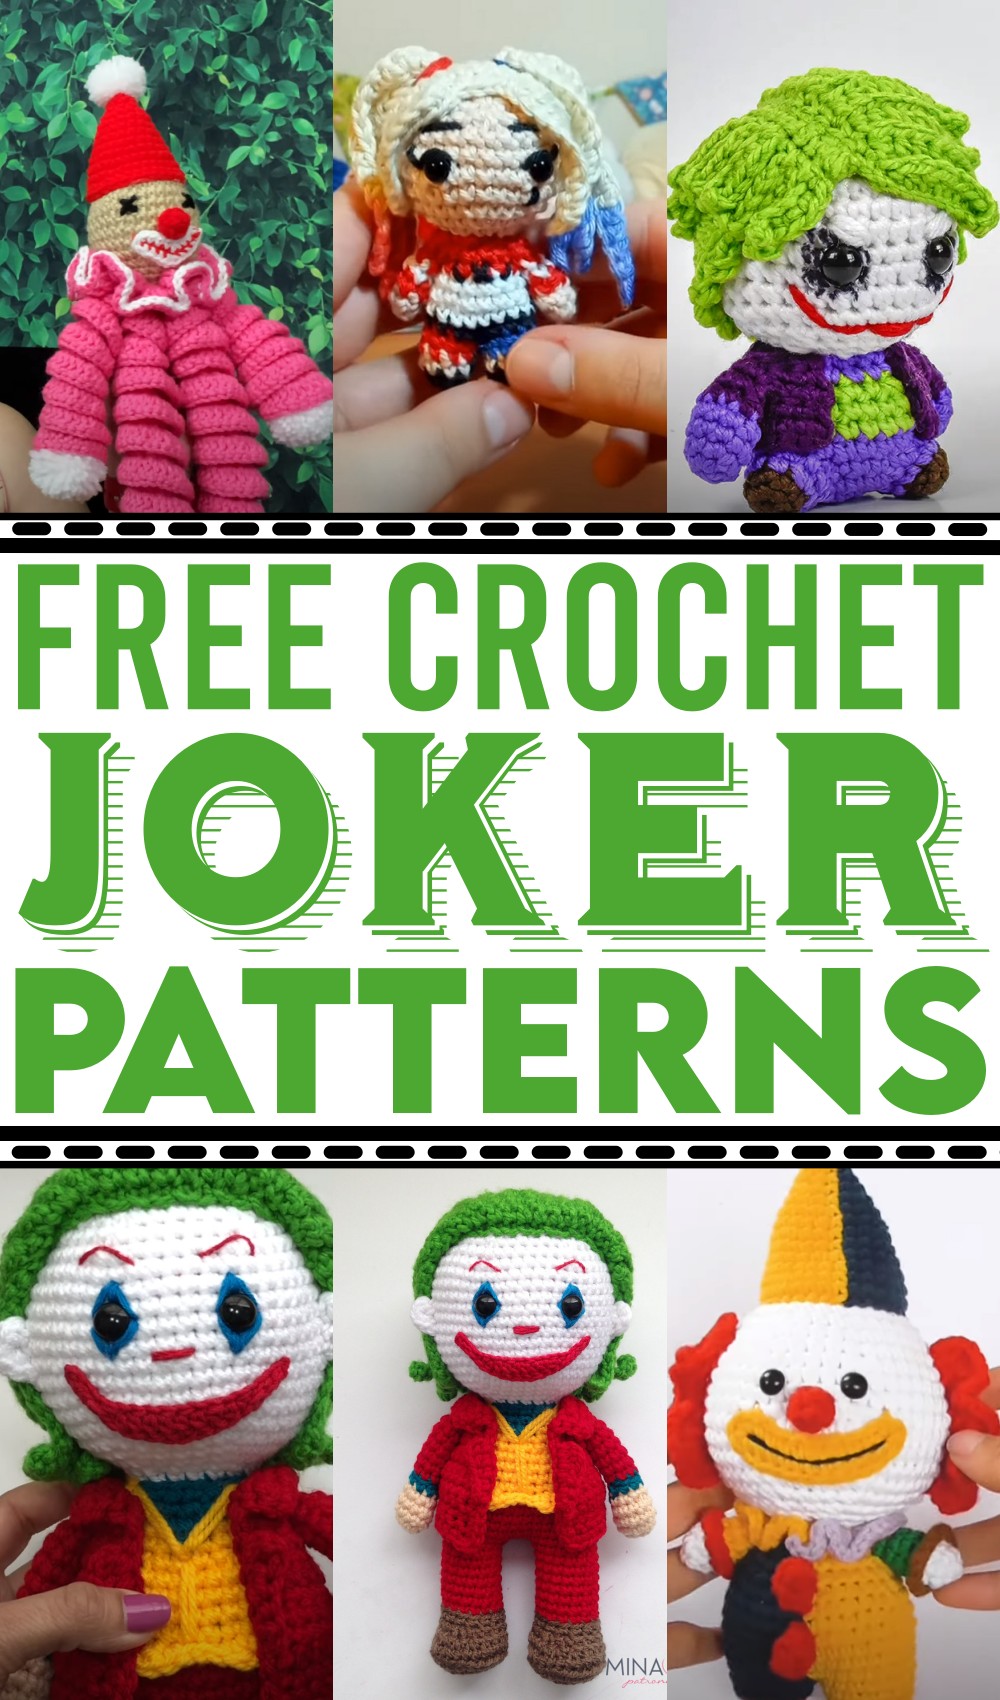 Crochet Joker Patterns